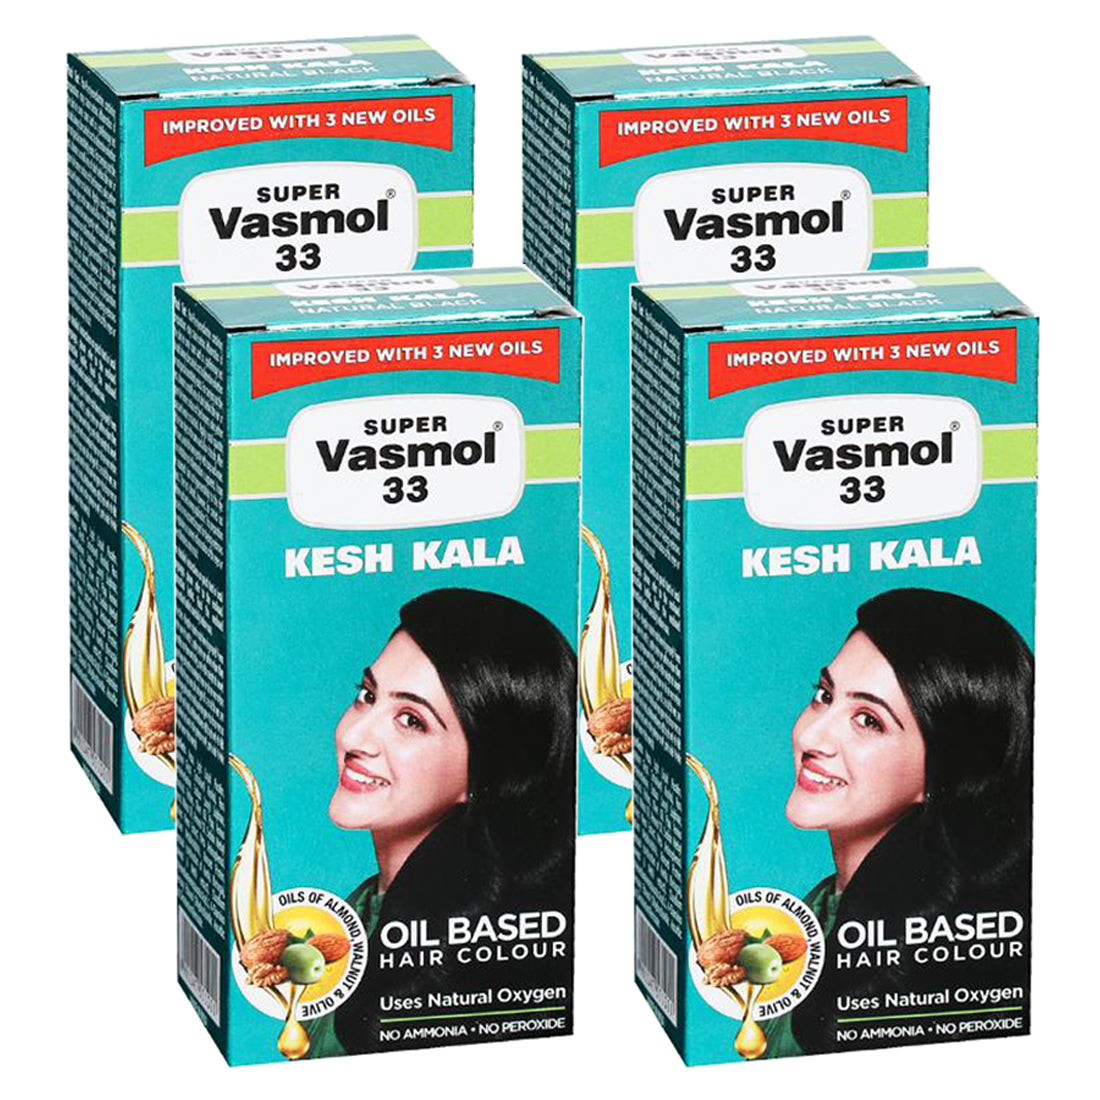 Super Vasmol Kesh Kala Oil Based Hair Color -50ml Pack Of 4